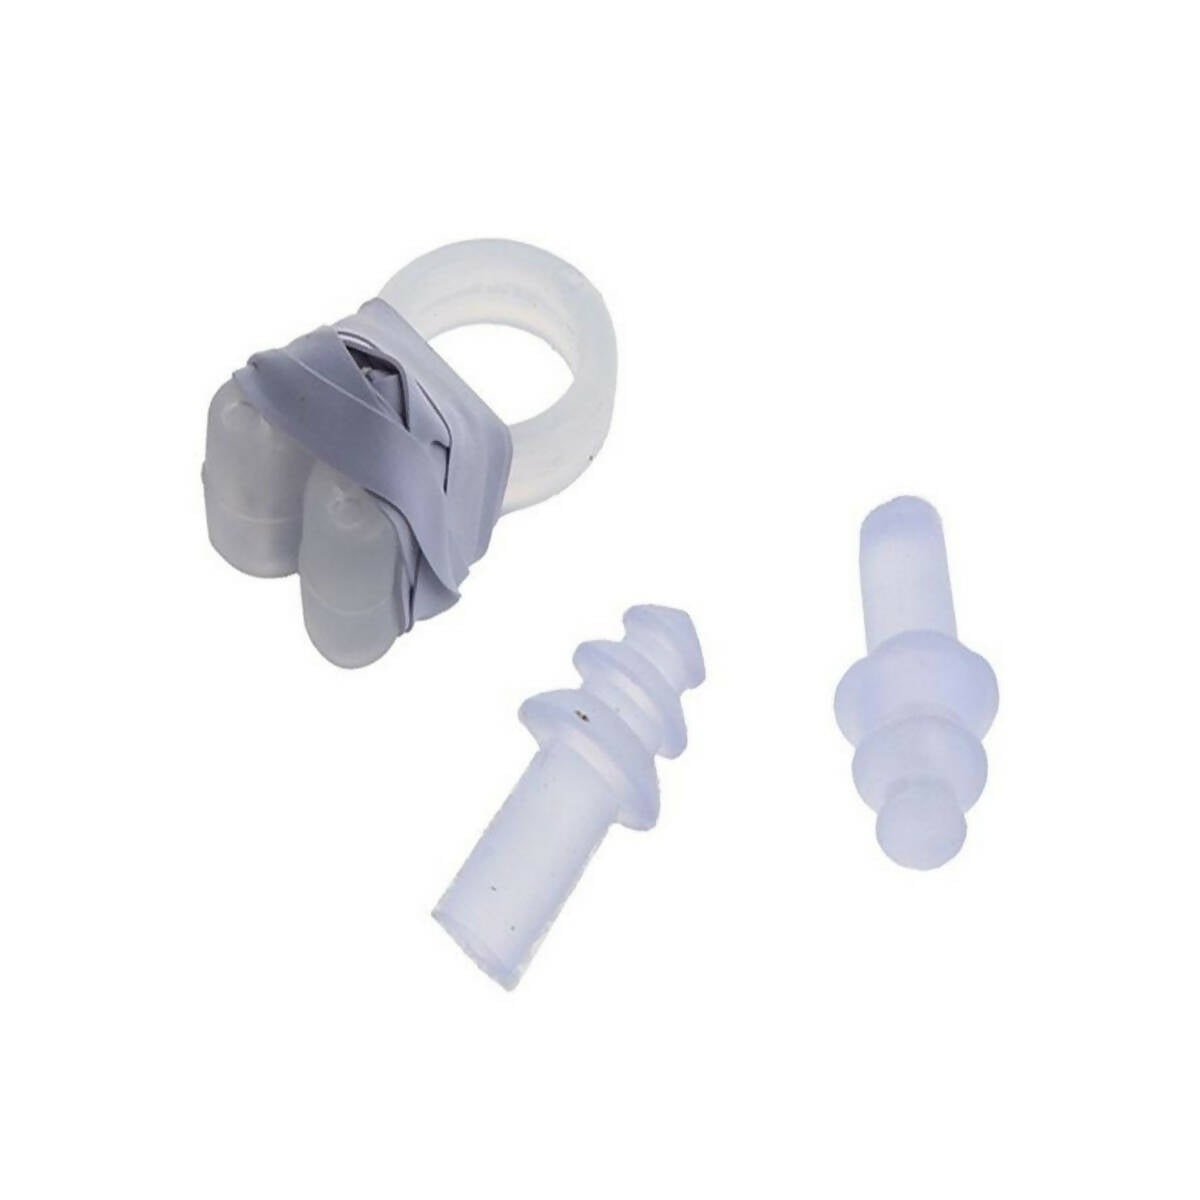 Silicone Ear Plugs & Nose Clip Set - White